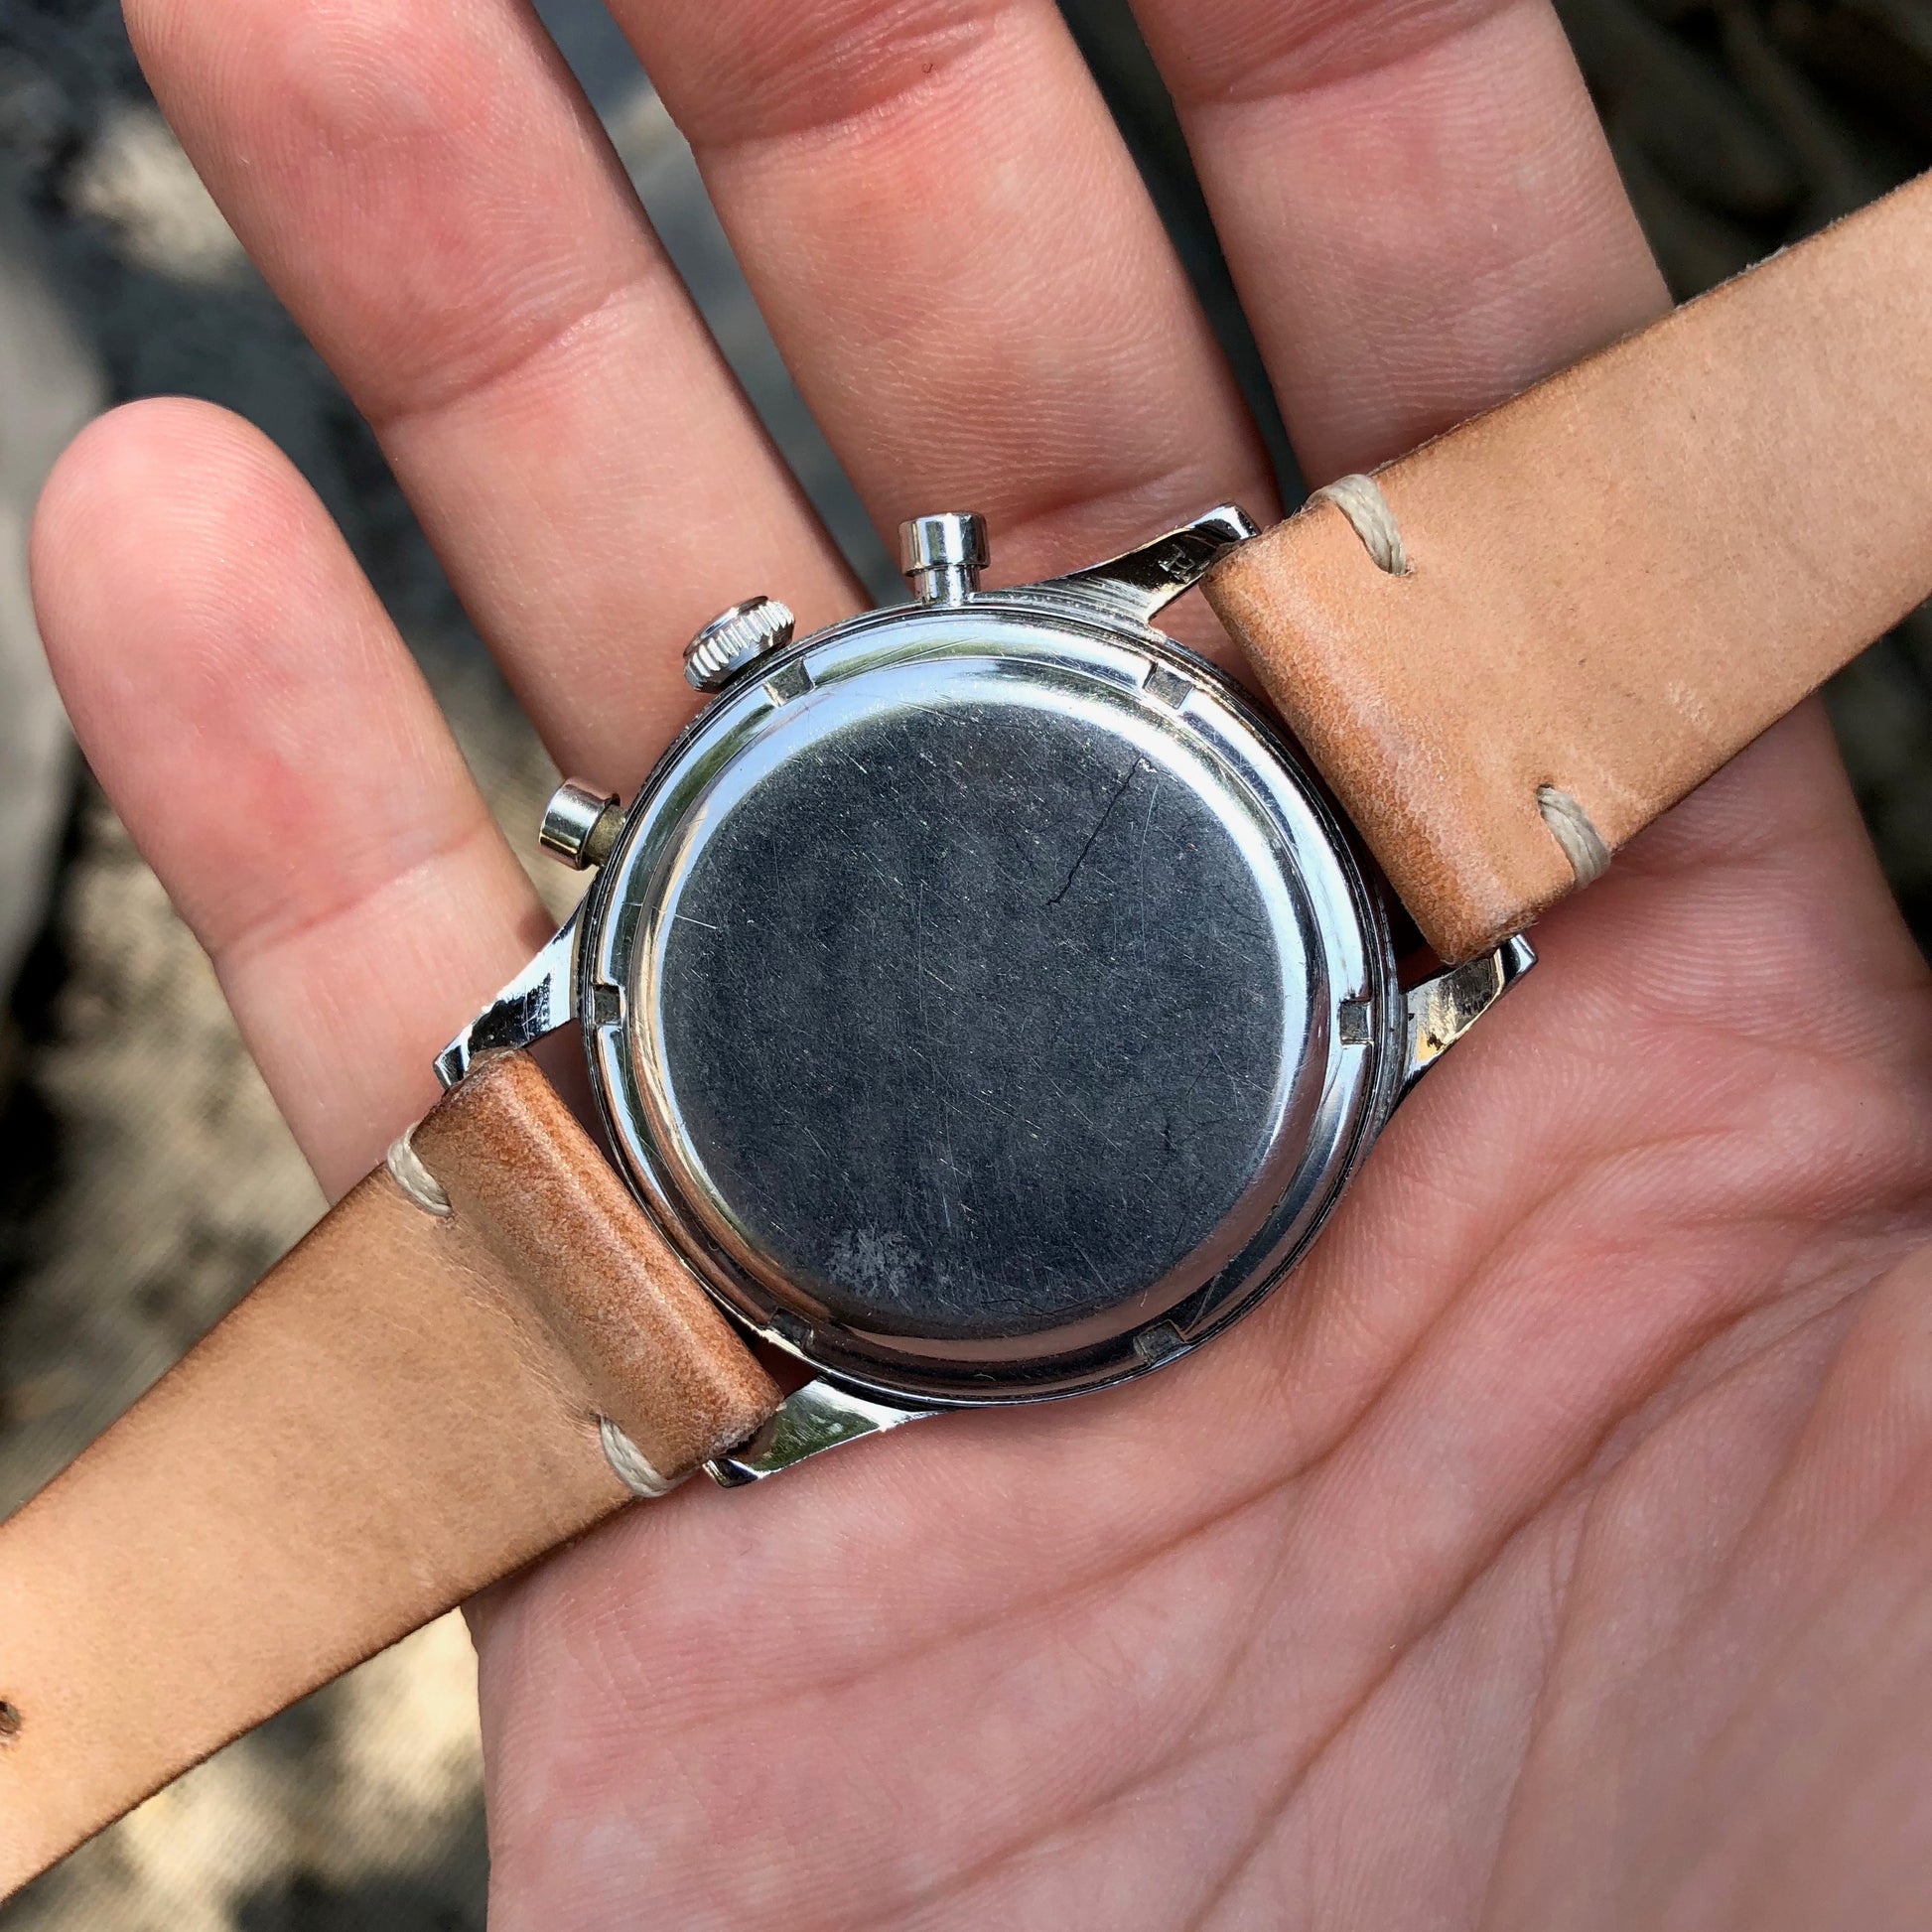 Vintage Gallet Multichron Jim Clark Excelsior Park Steel Chronograph Wristwatch - Hashtag Watch Company